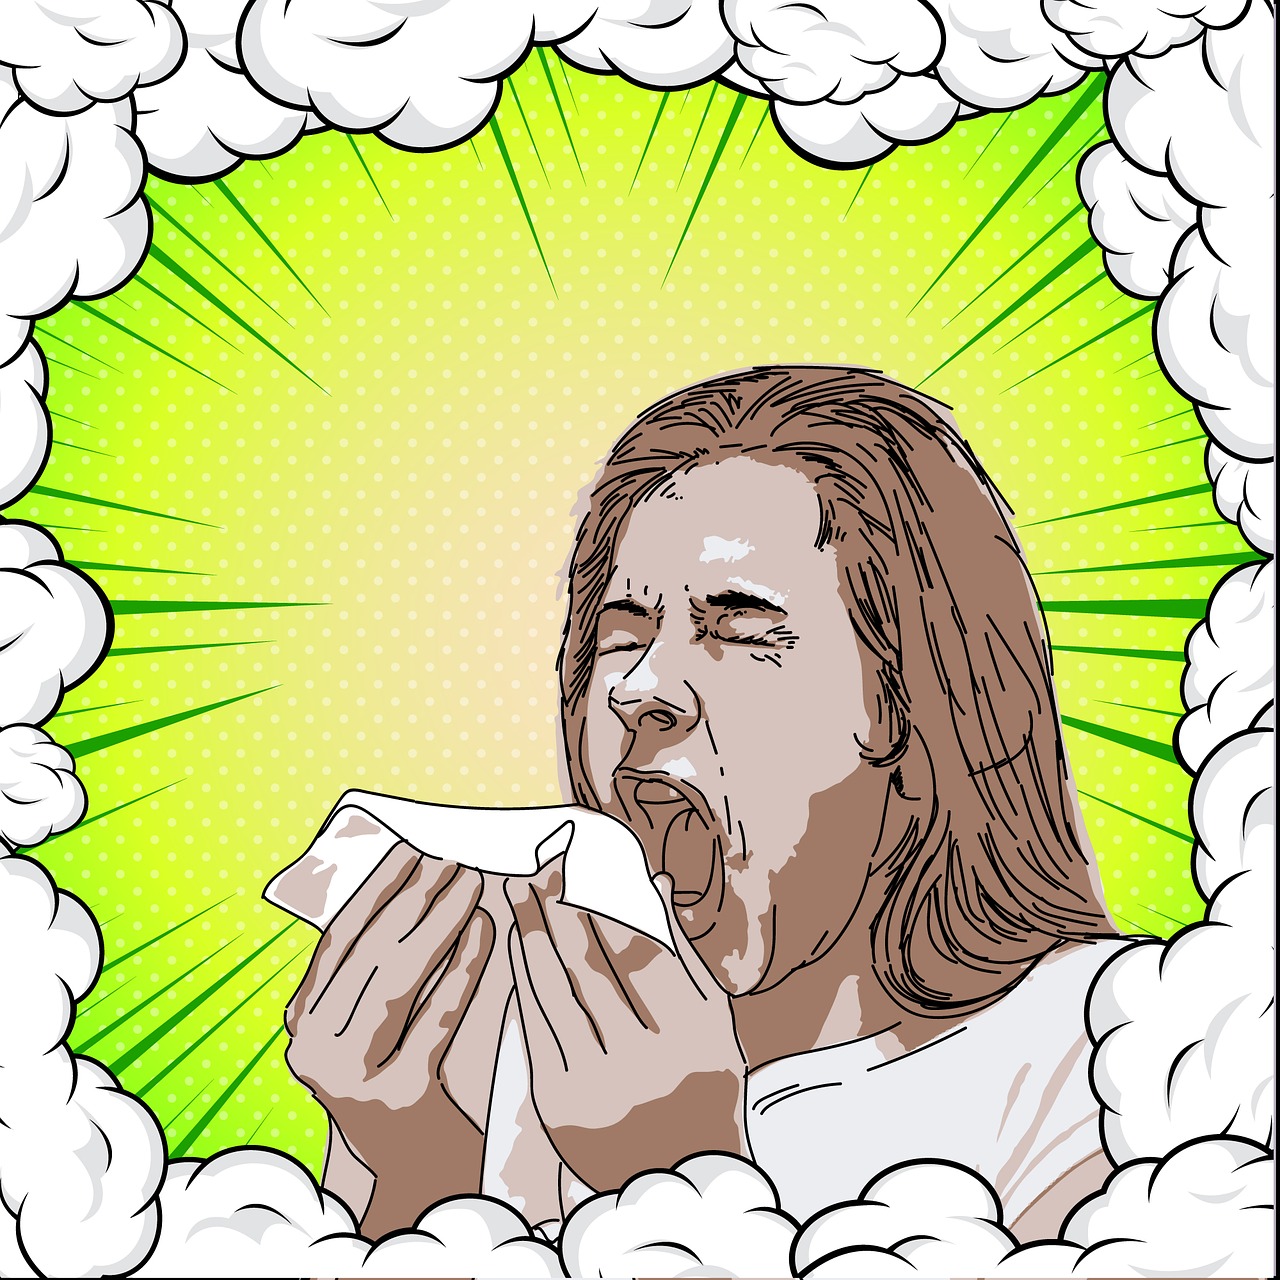 Image of a man sneezing